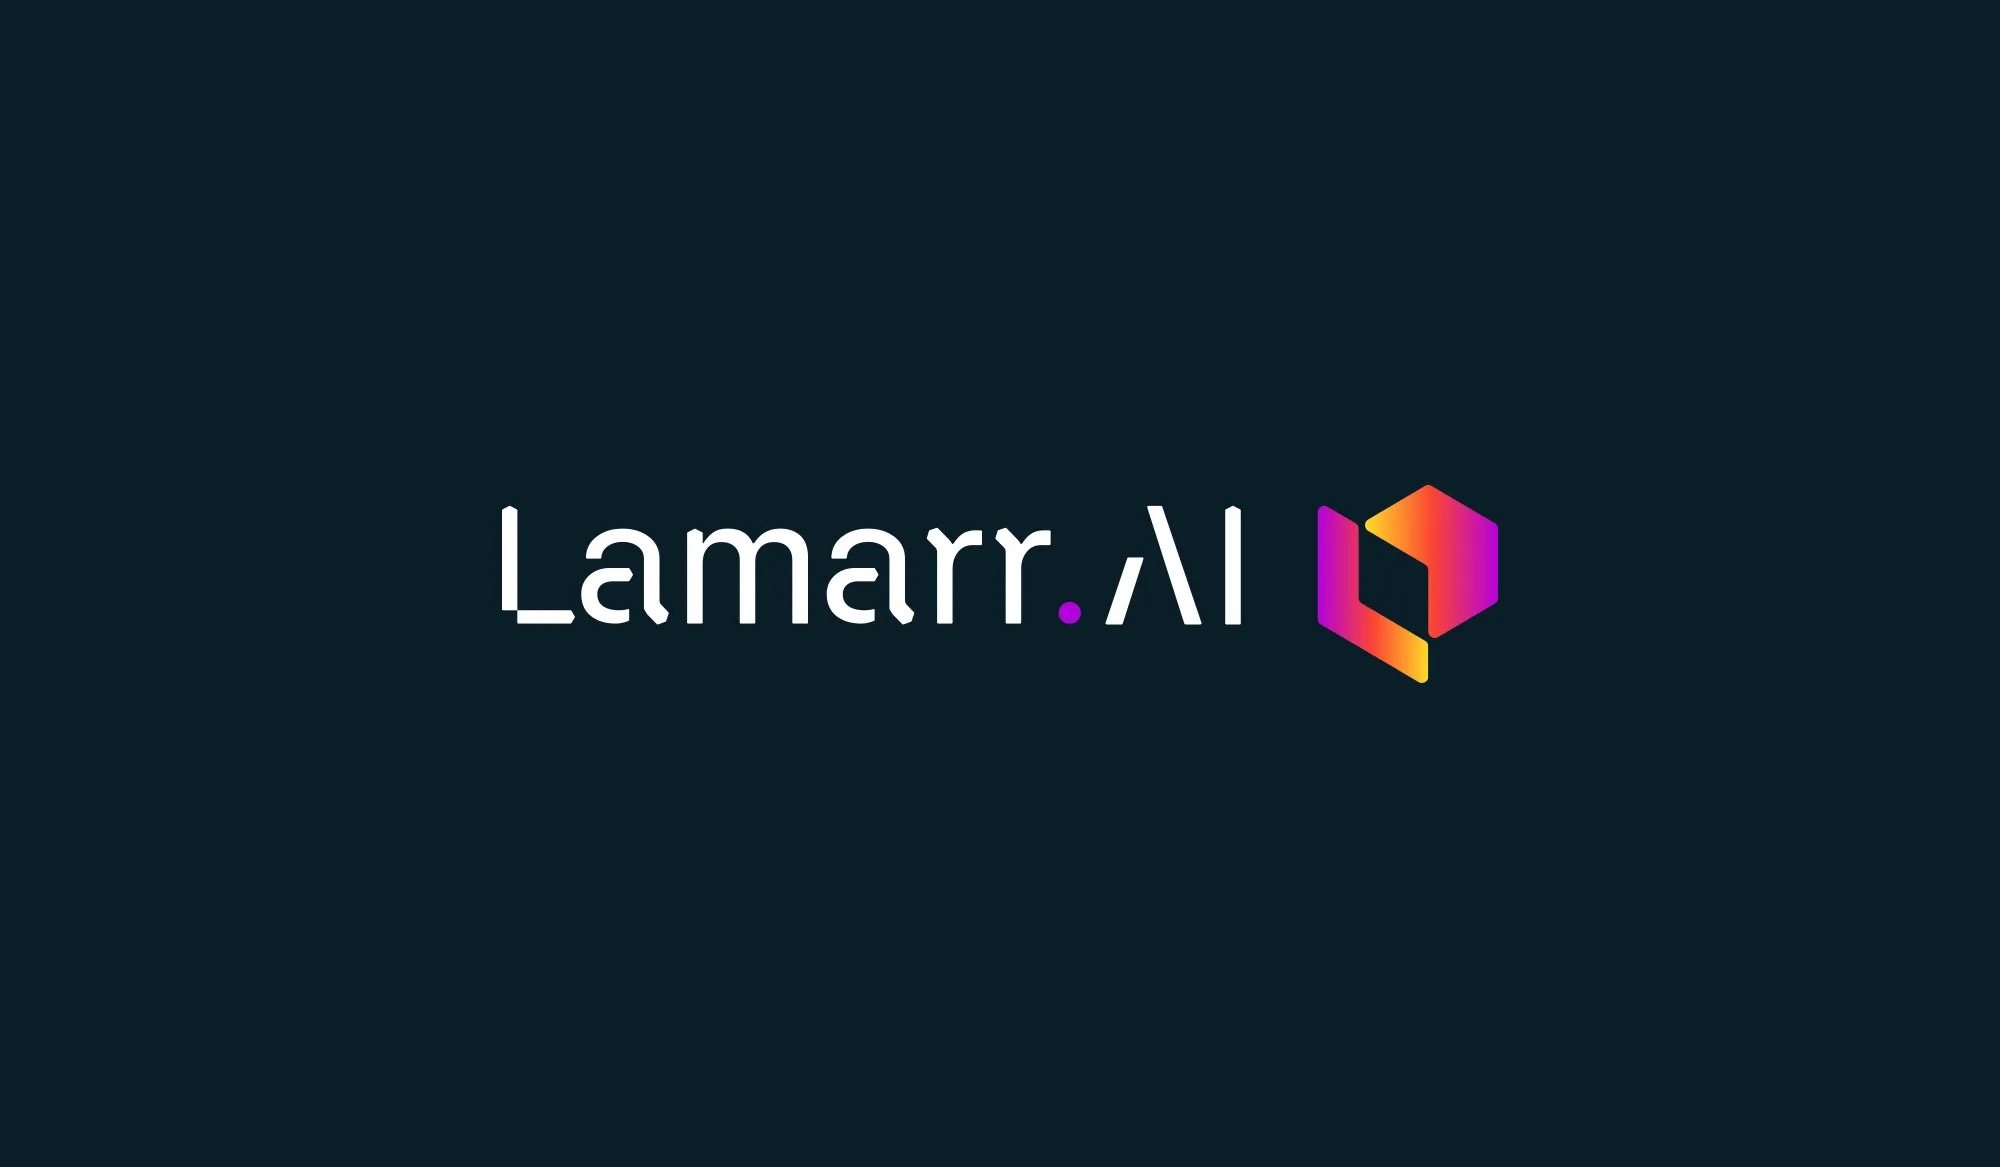 Lamarr.AI Brand Identity